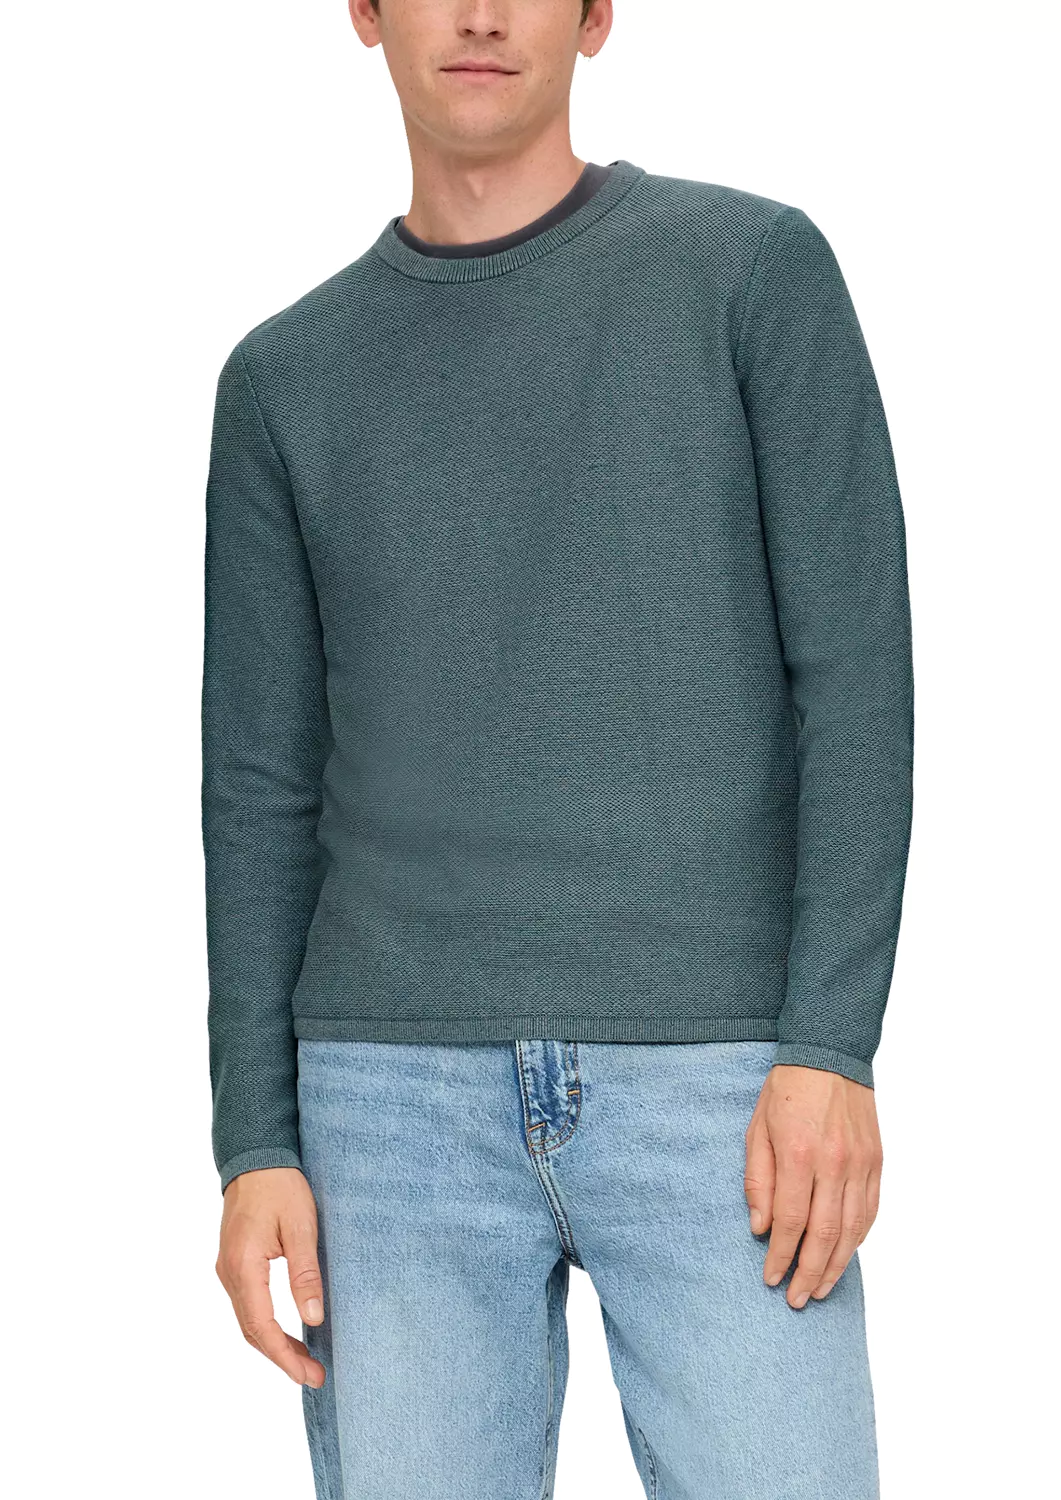 Пуловер мужской QS by s.Oliver 50.3.51.17.170.2134570*63W0*XL петроль, размер XL